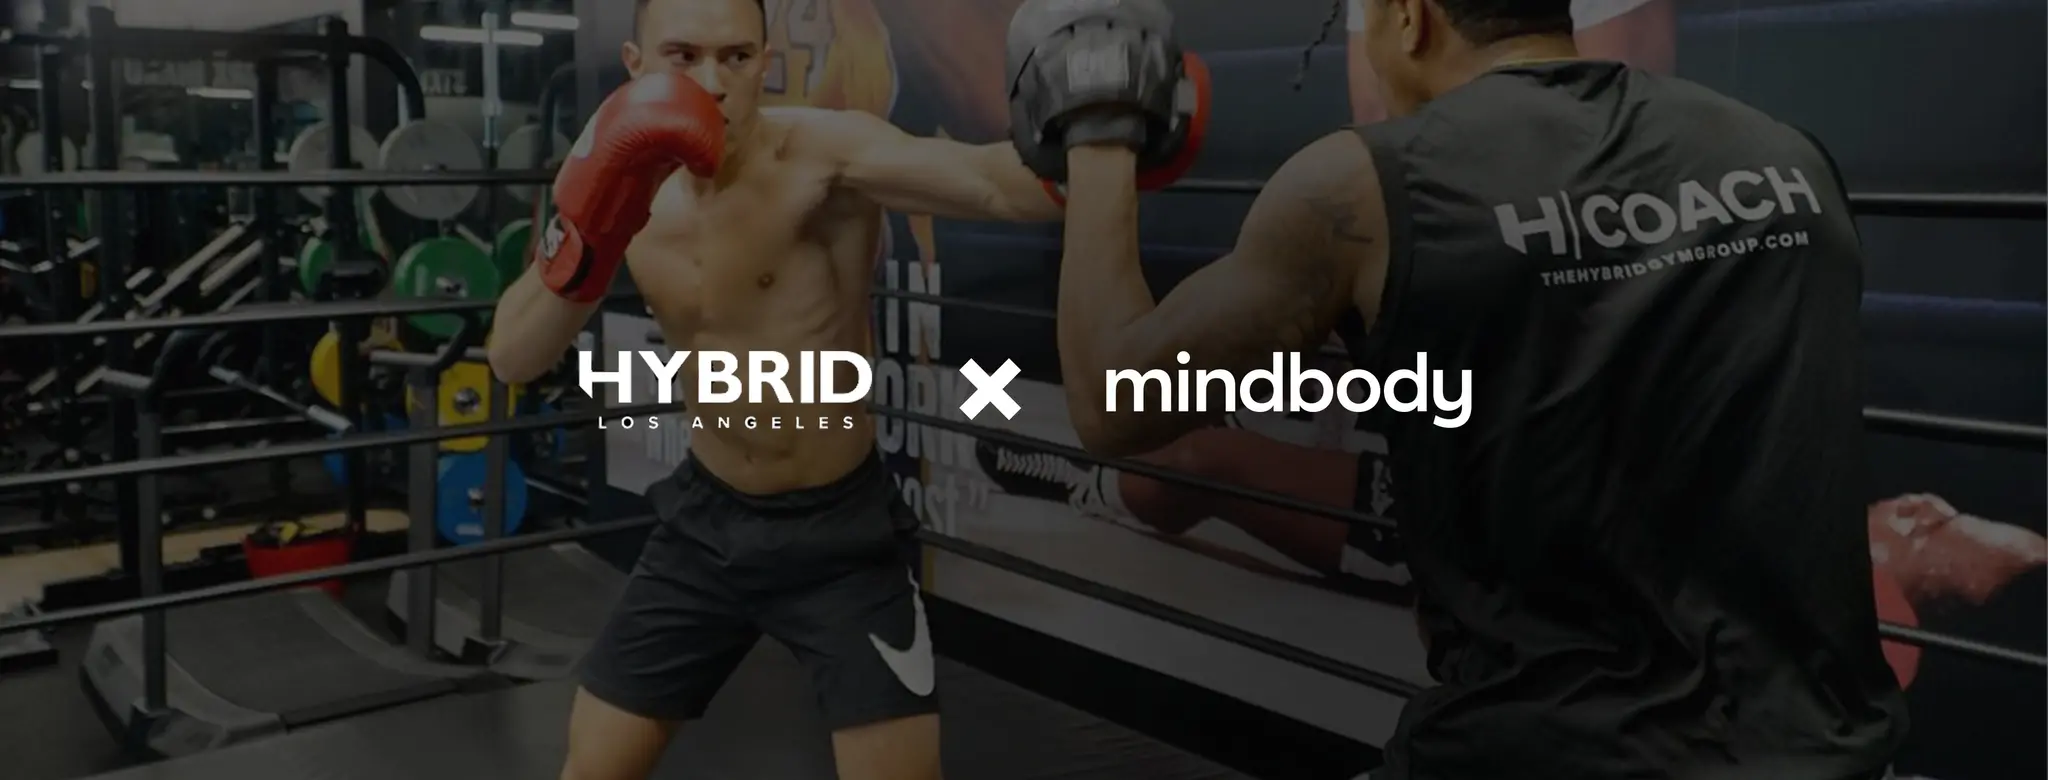 Hybrid Gym LA and Mindbody Image